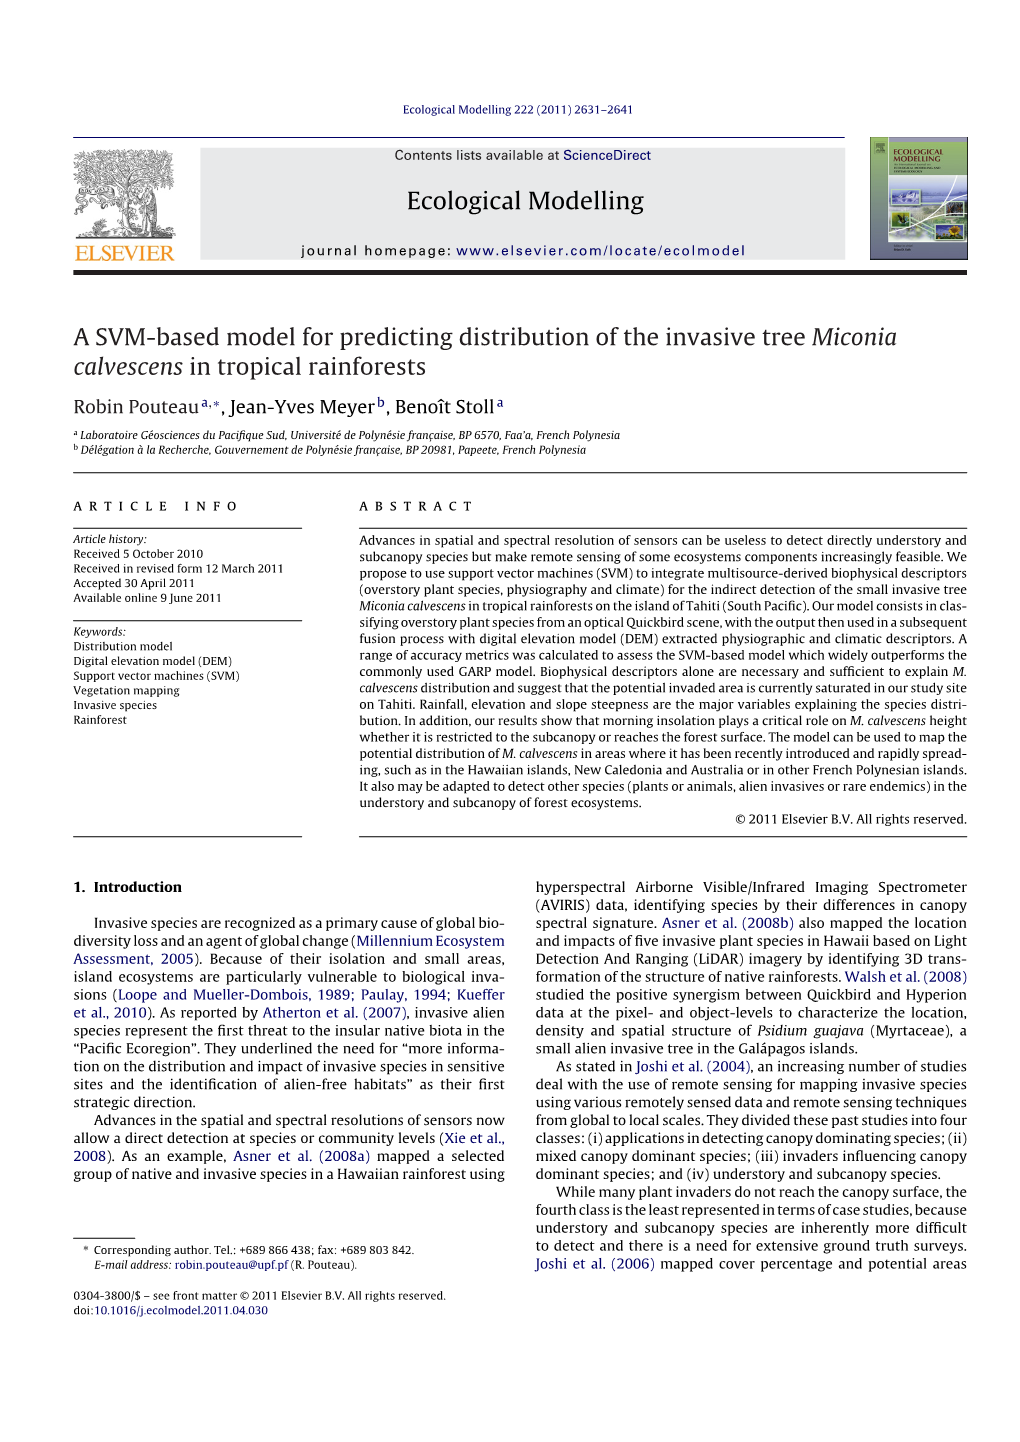 Ecological Modelling a SVM-Based Model for Predicting Distribution Of